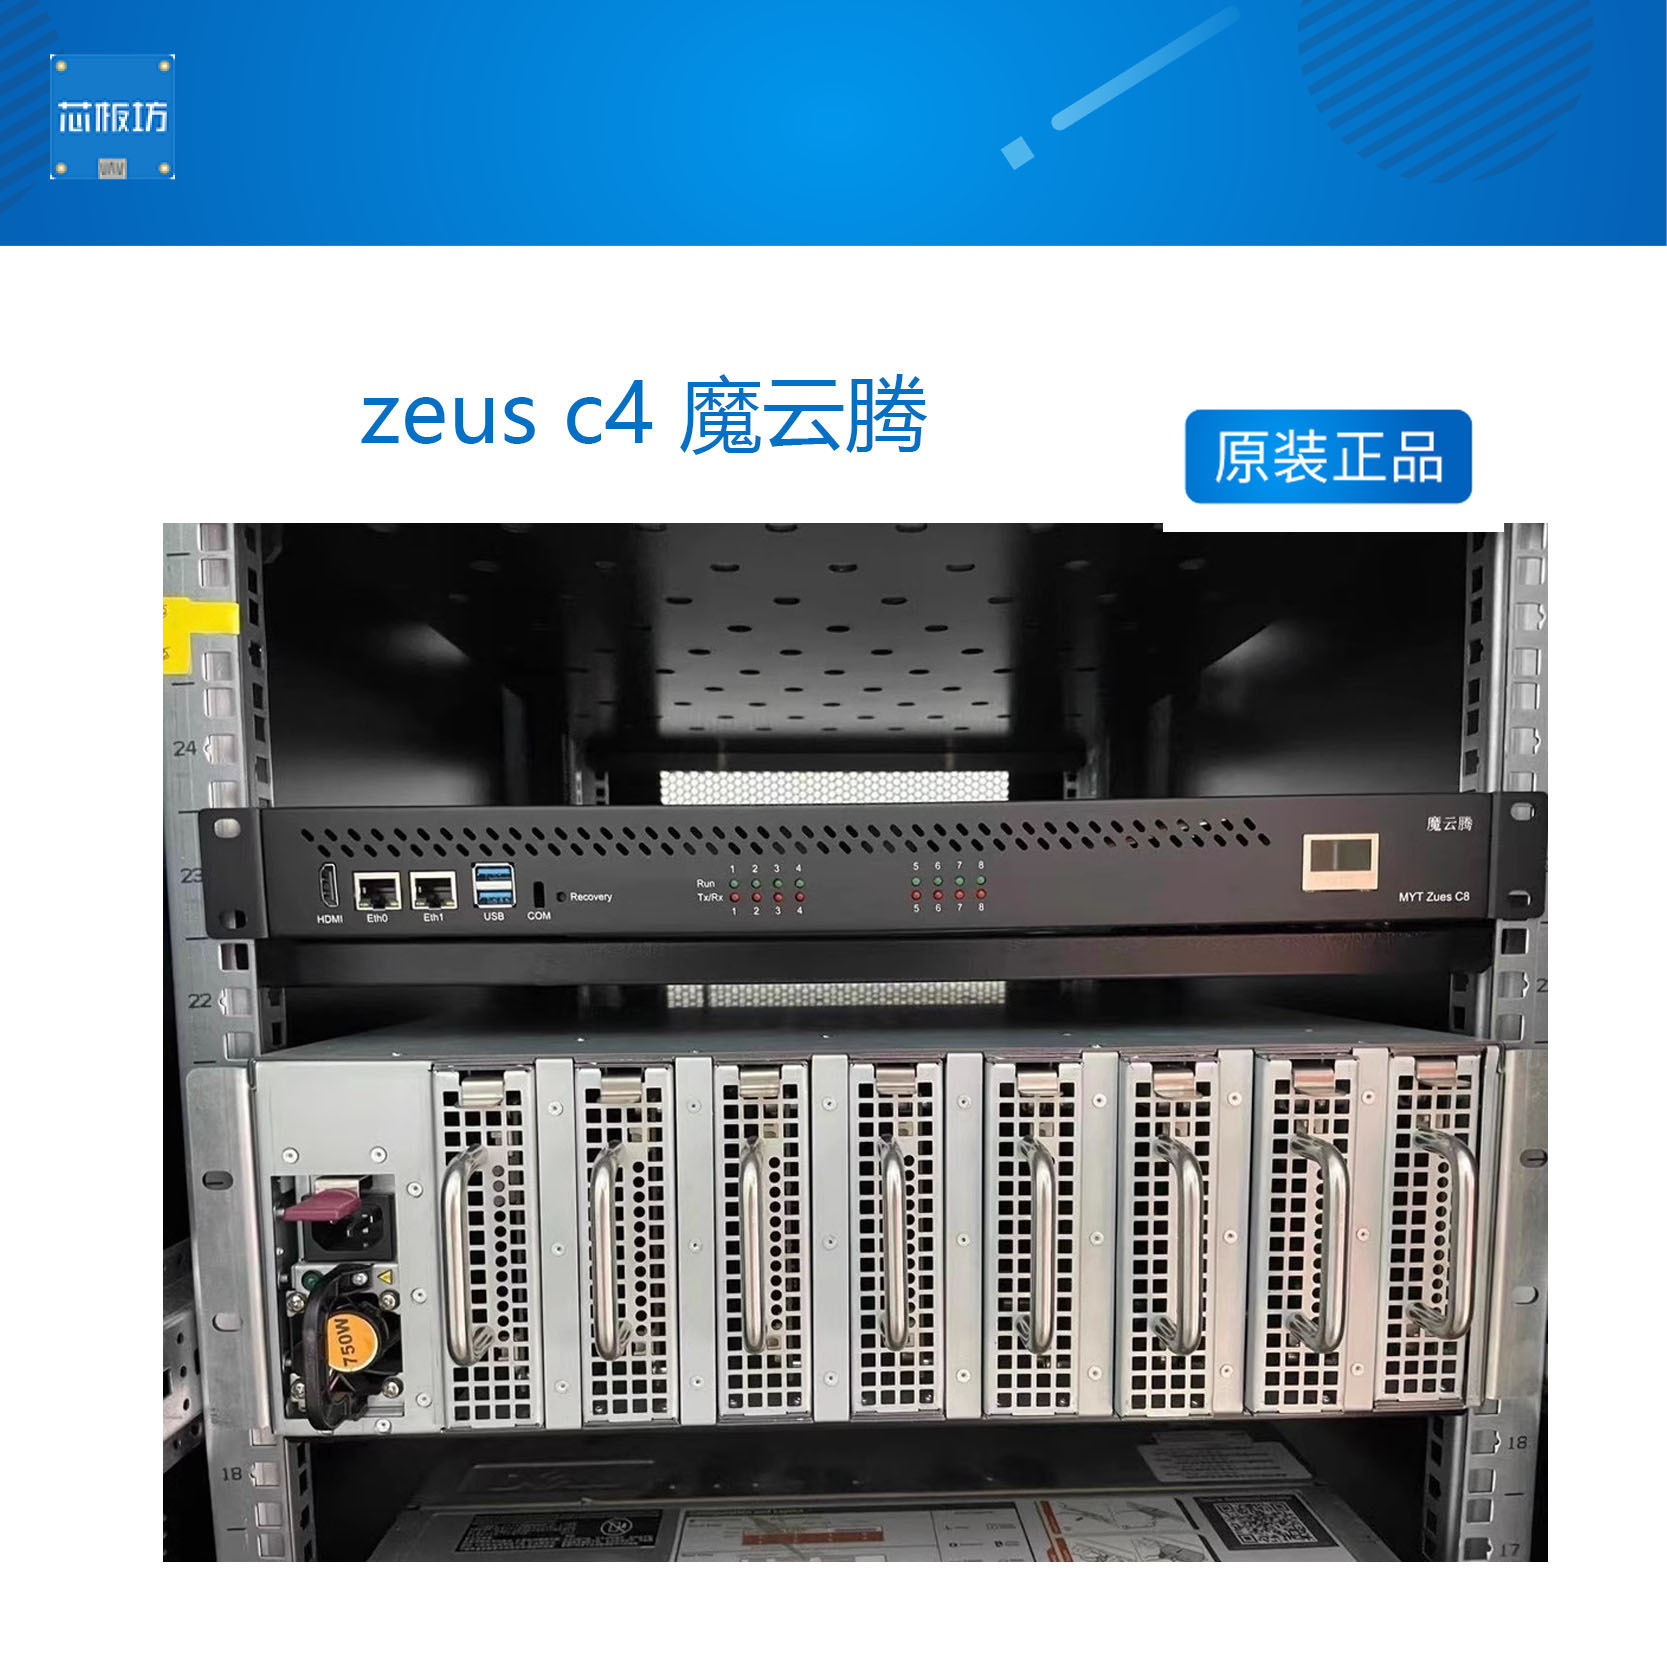 zeus c4 c8 魔云腾ARM服务器rk3588集群管理内置rk3568 openwrt